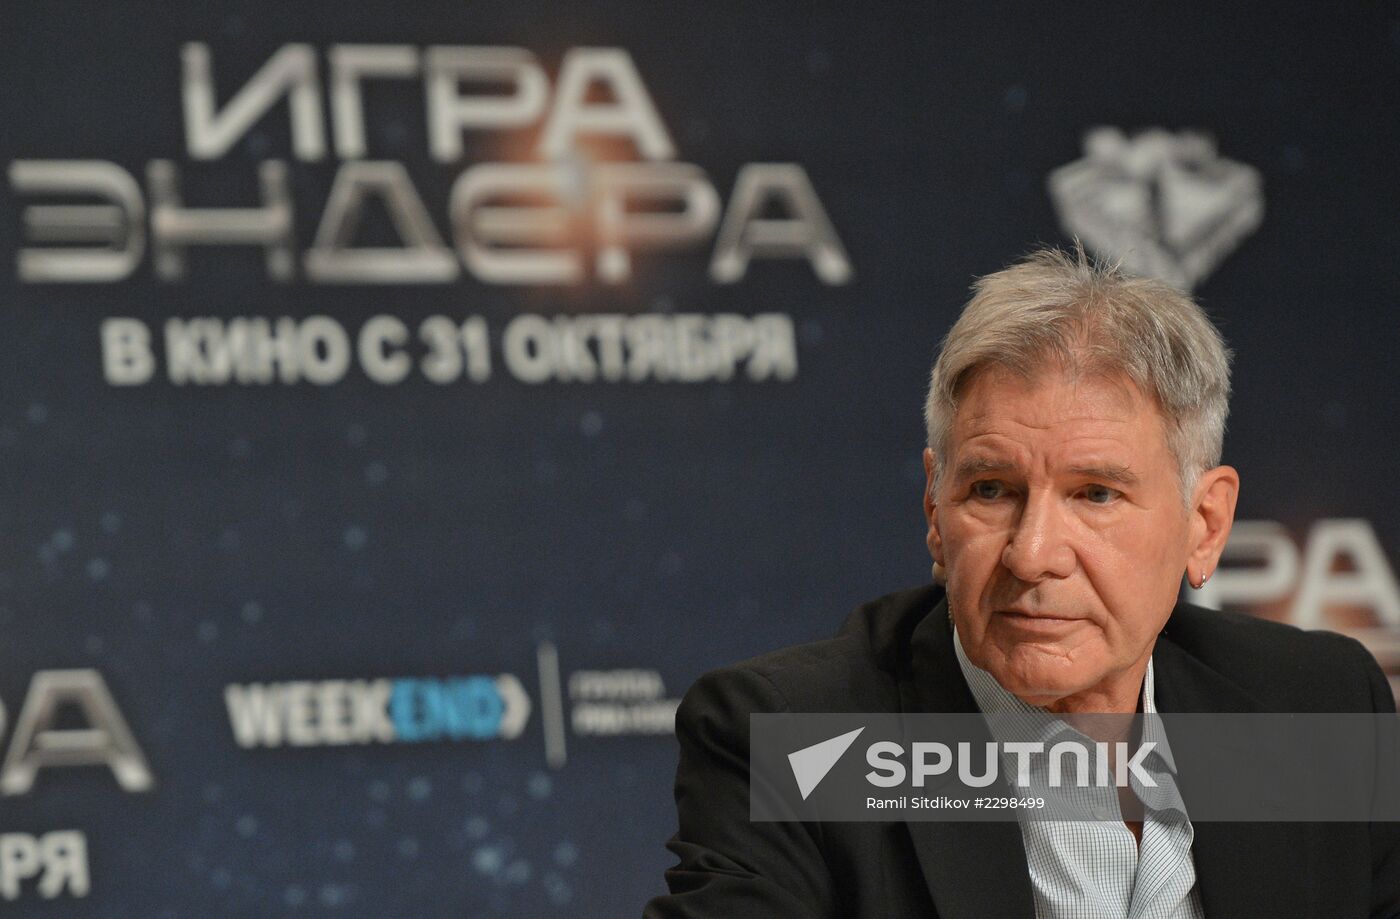 US actor Harrison Ford at RIA Novosti news agency